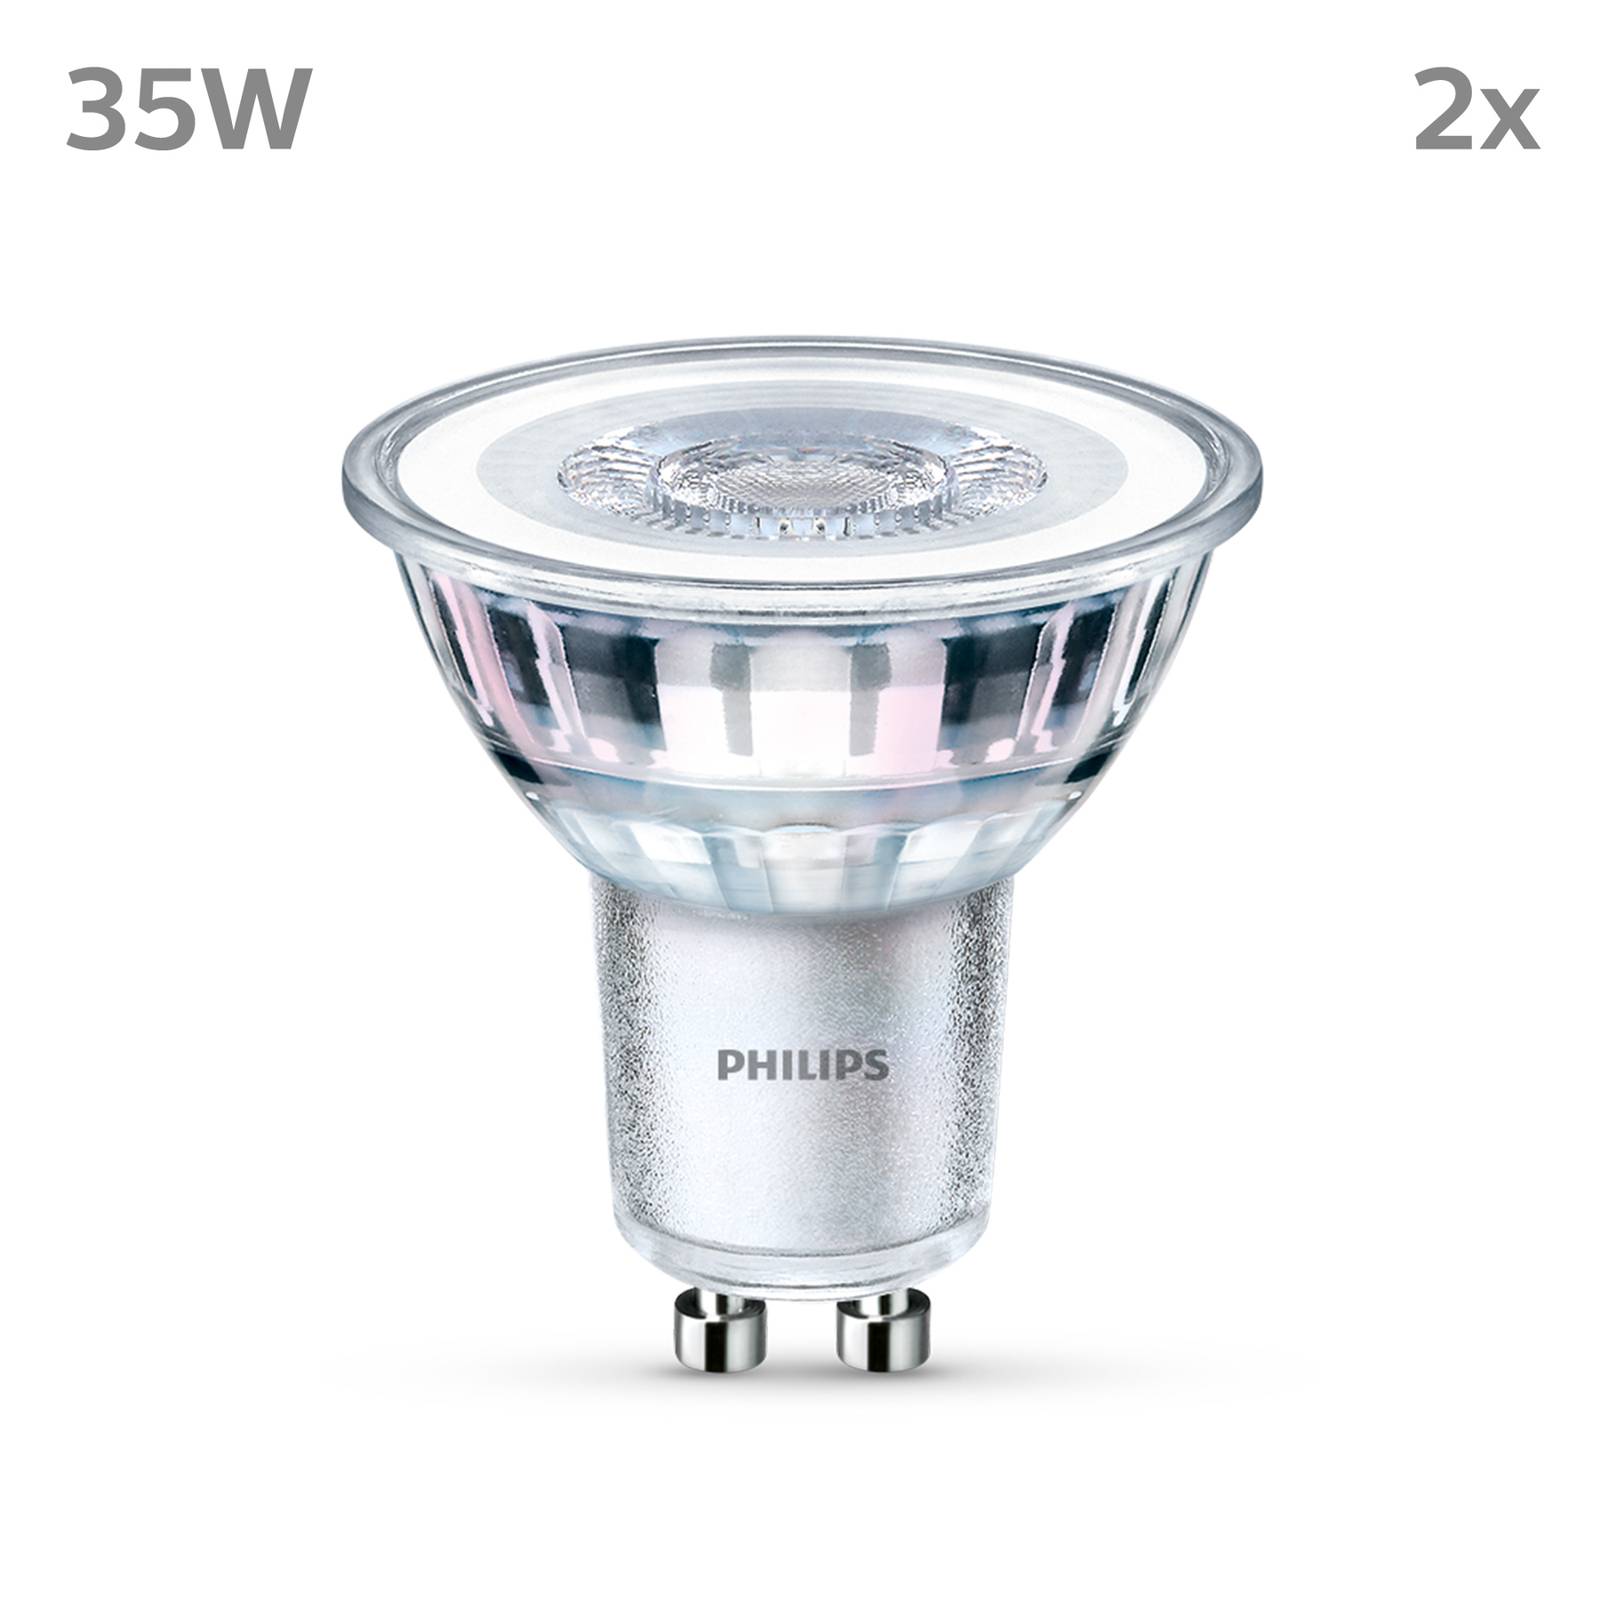 Philips Philips LED žárovka GU10 3,5W 275lm 840 čirá 36° 2